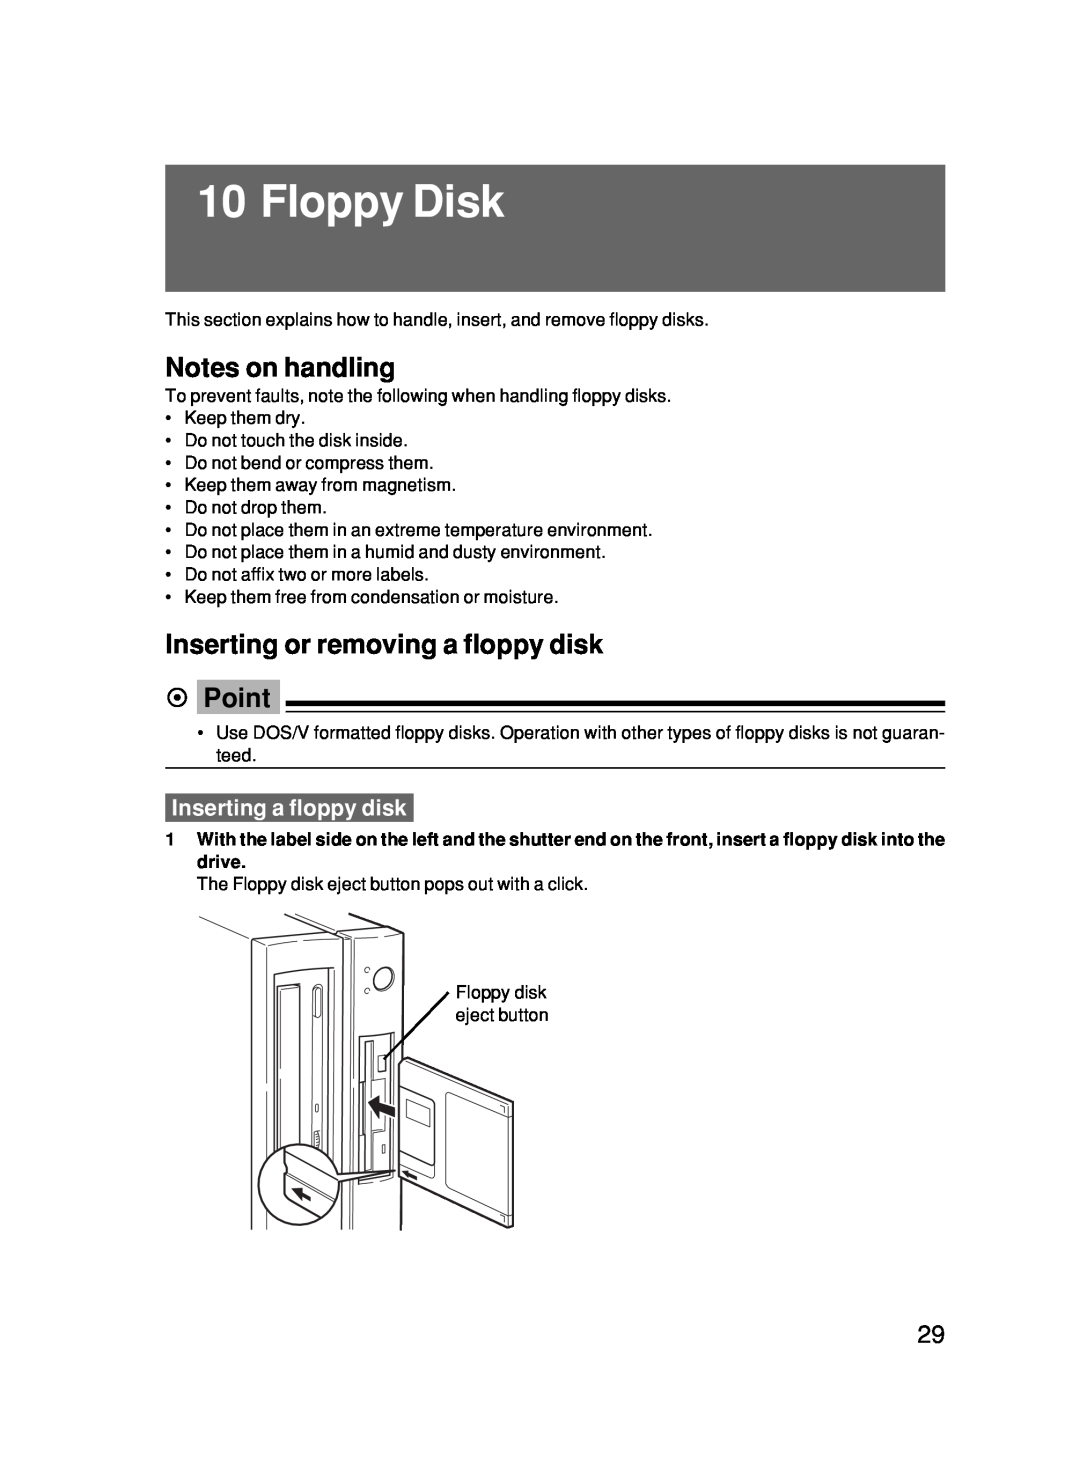 Fujitsu 500 user manual Floppy Disk, Inserting or removing a floppy disk Point, Inserting a floppy disk, Notes on handling 